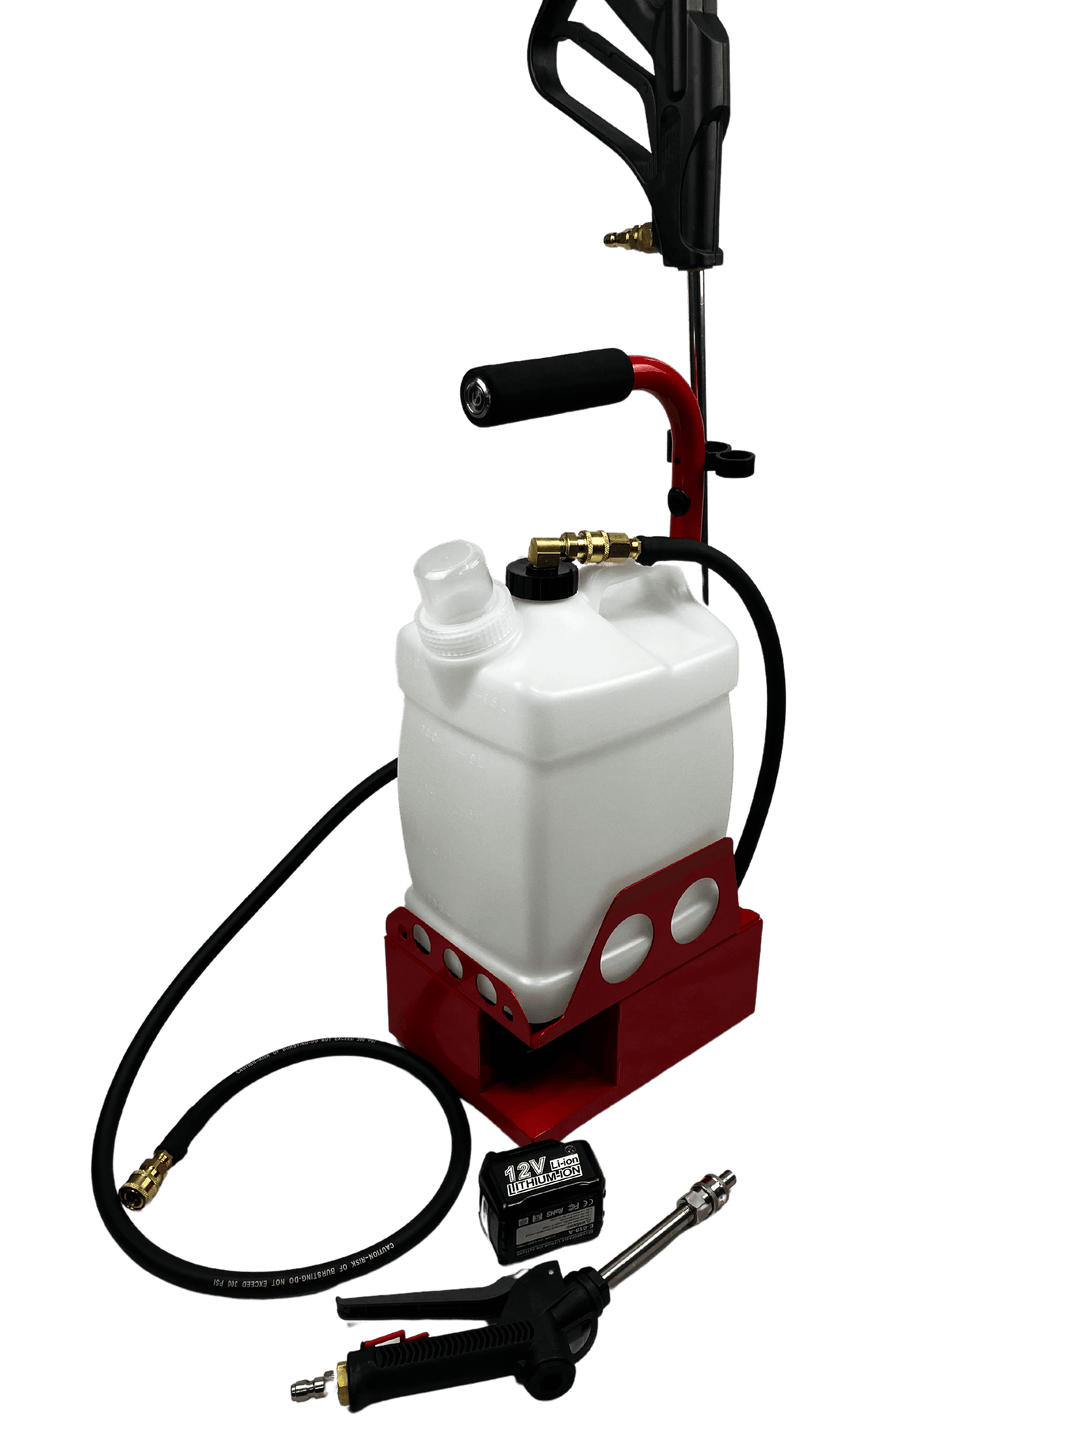 TMF Modified Cordless Electric Sprayer v3 *PRE-ORDER*